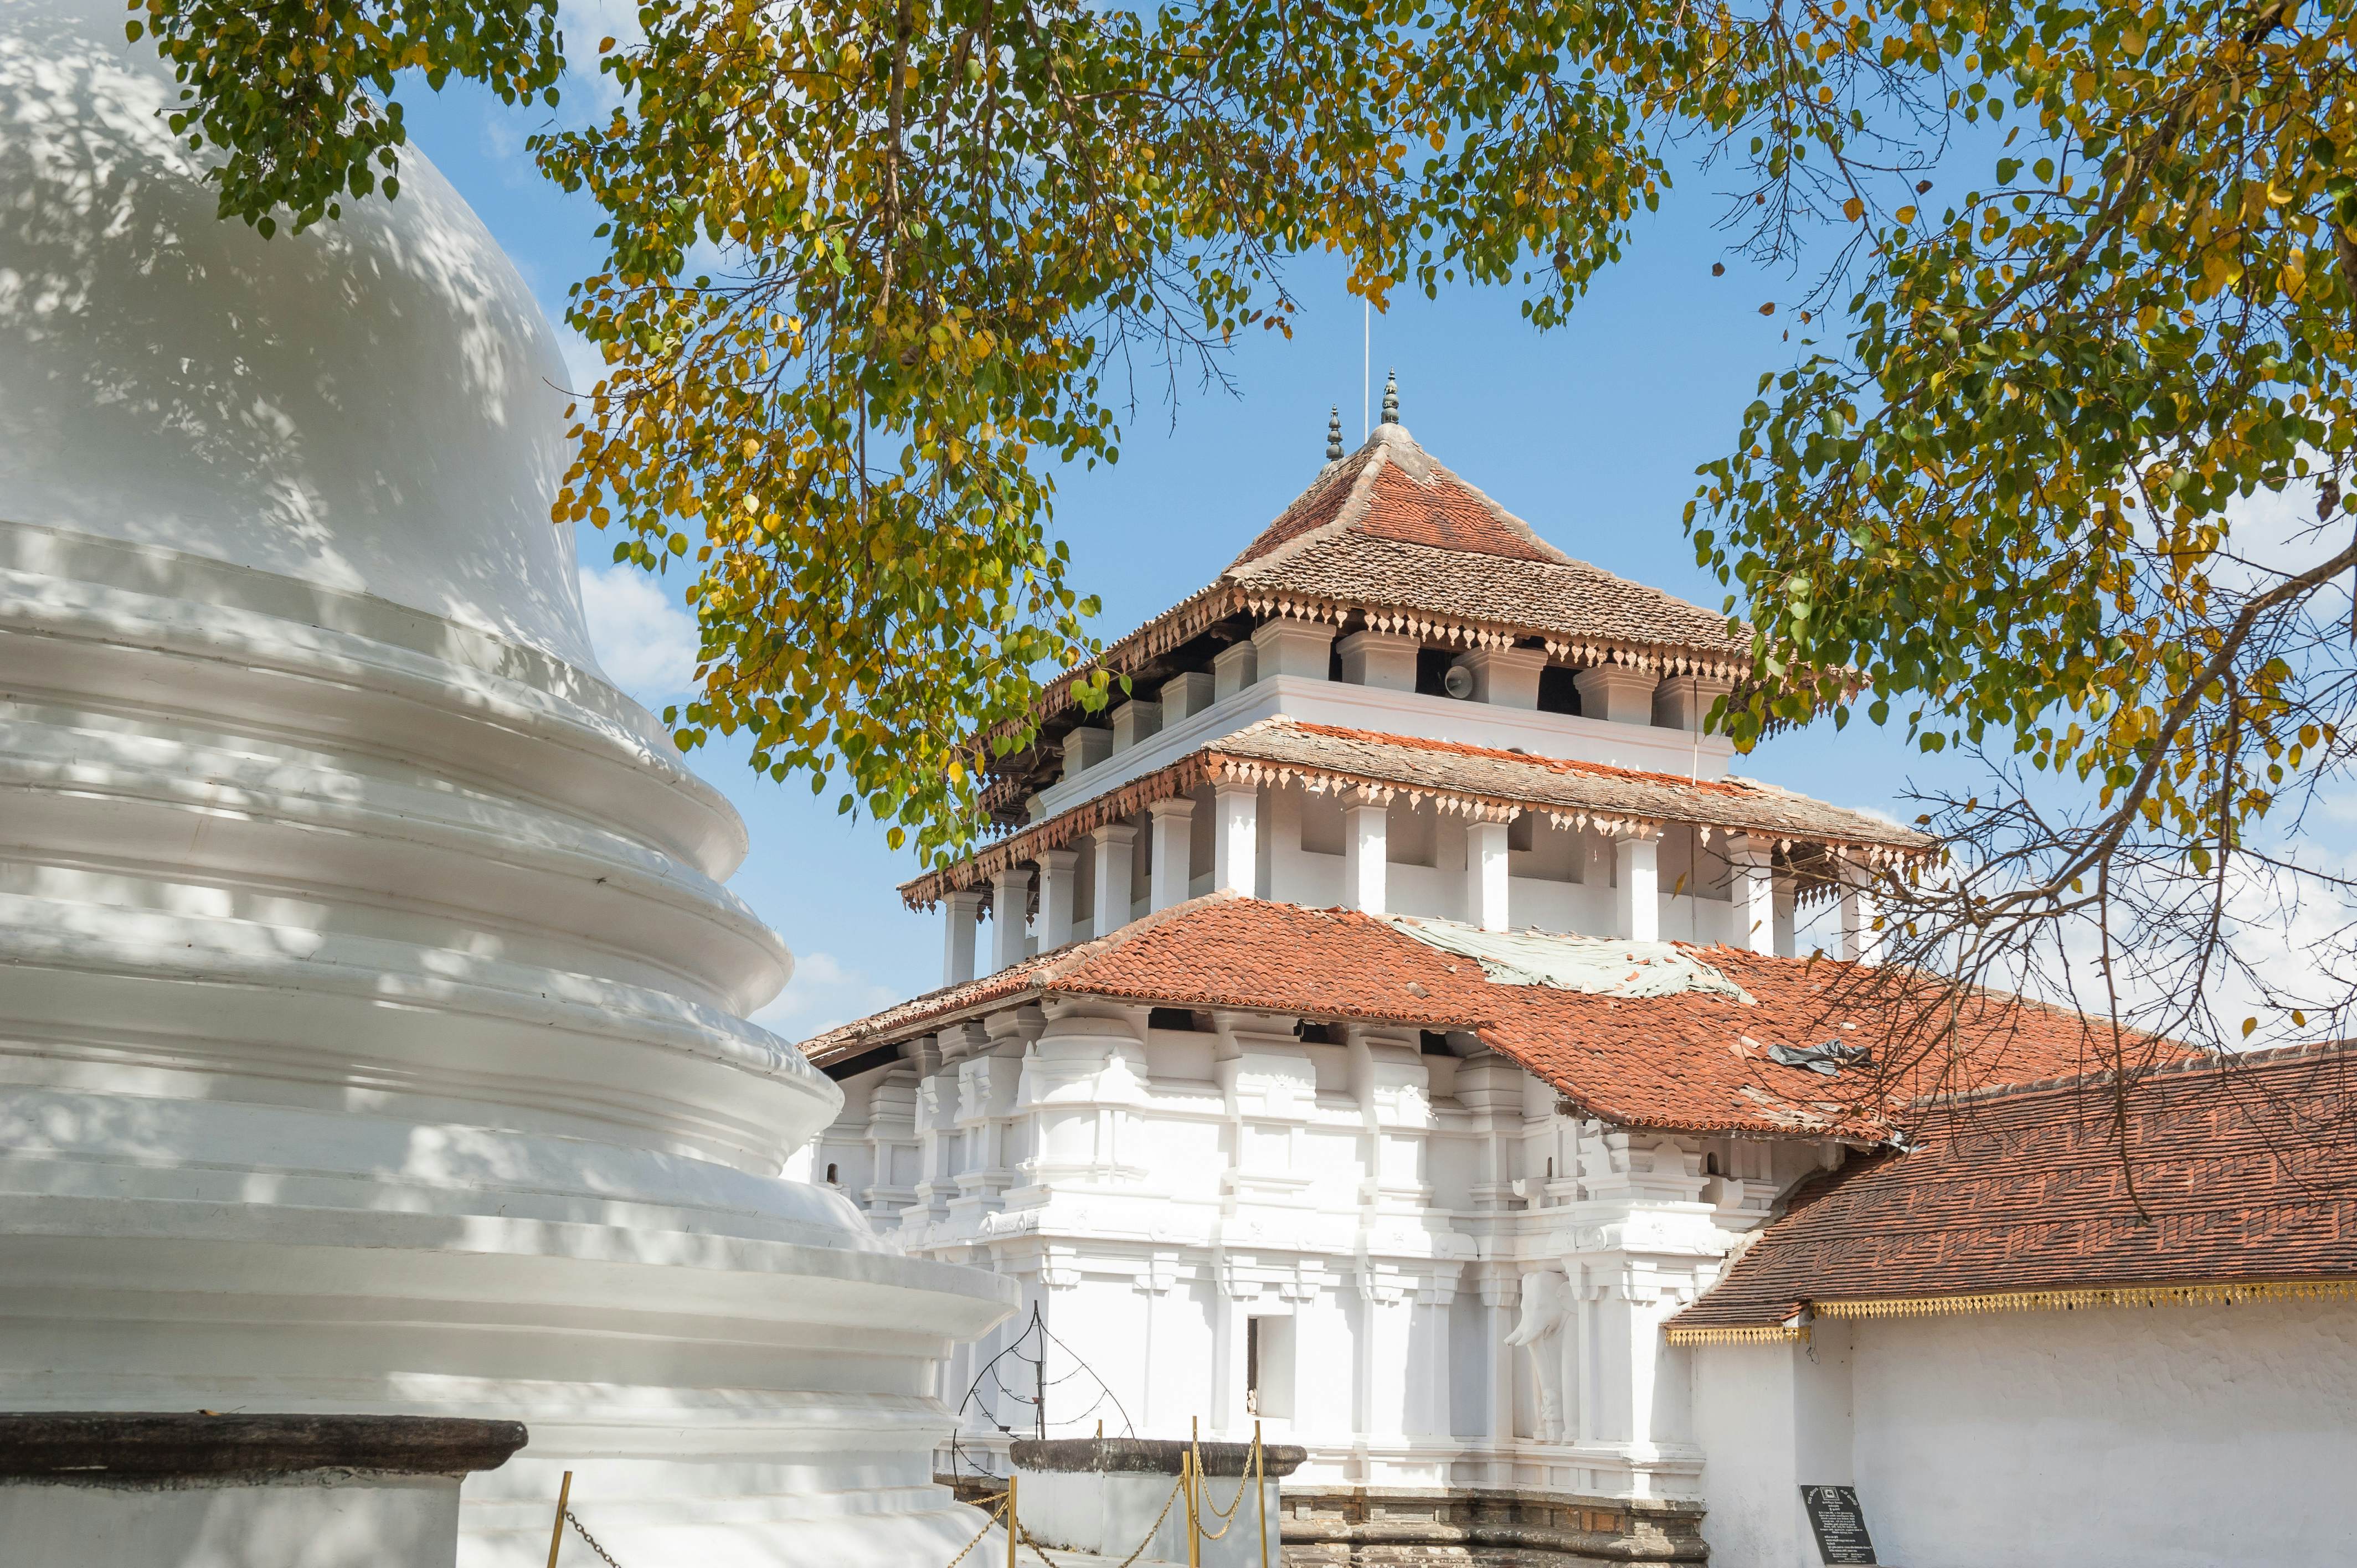 Sri Lanka Kandy Lankatilake buddhist temple Stock Photo - Alamy